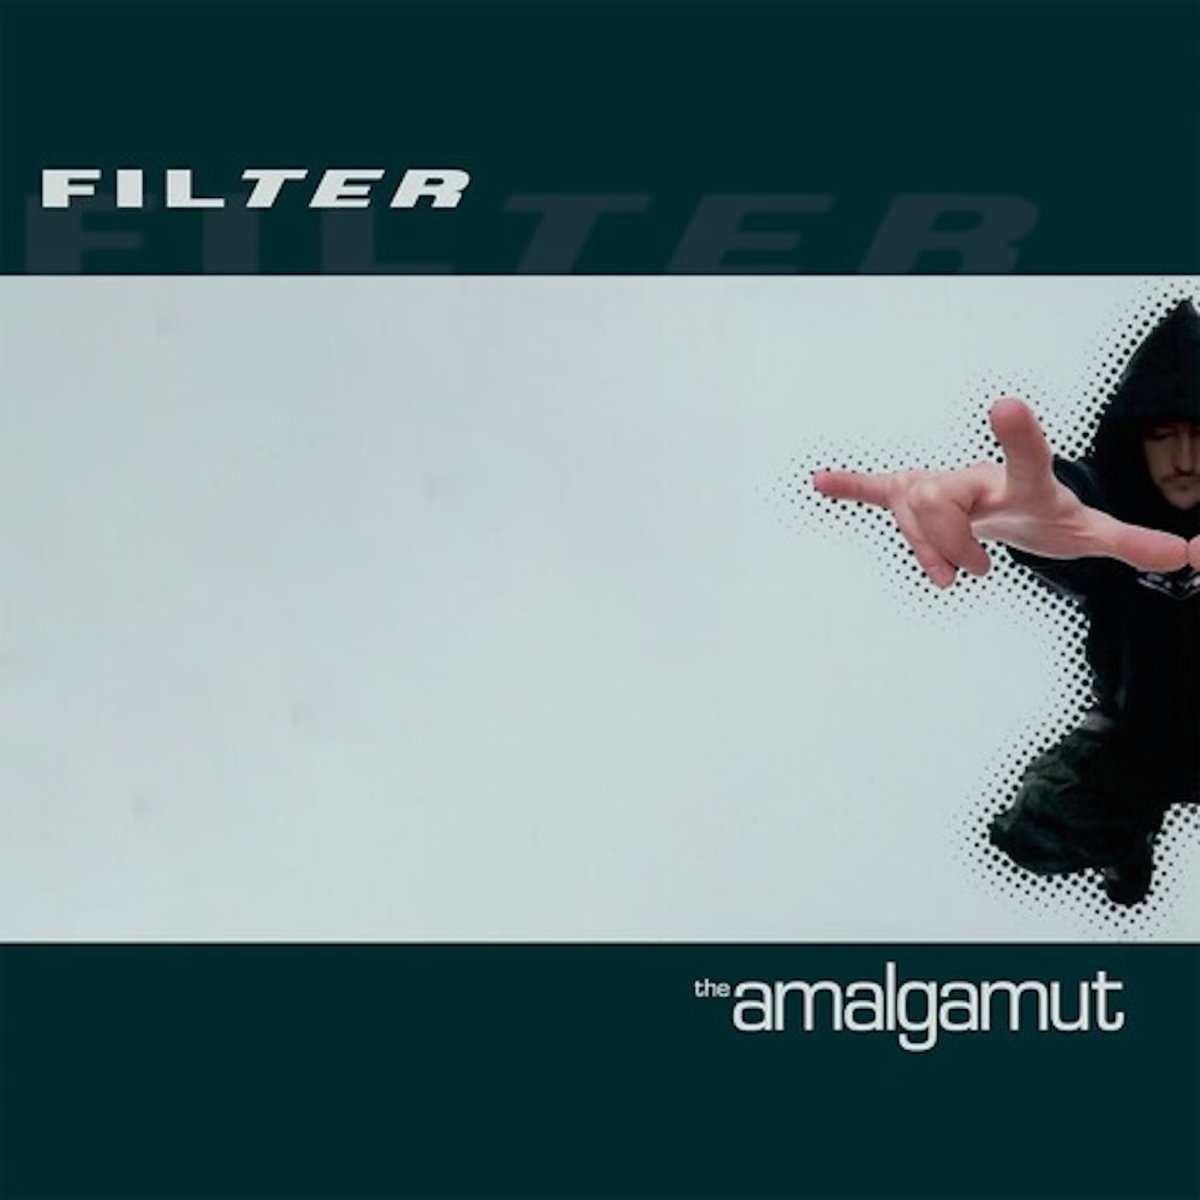 Filter - The Amalgamut Vinyl